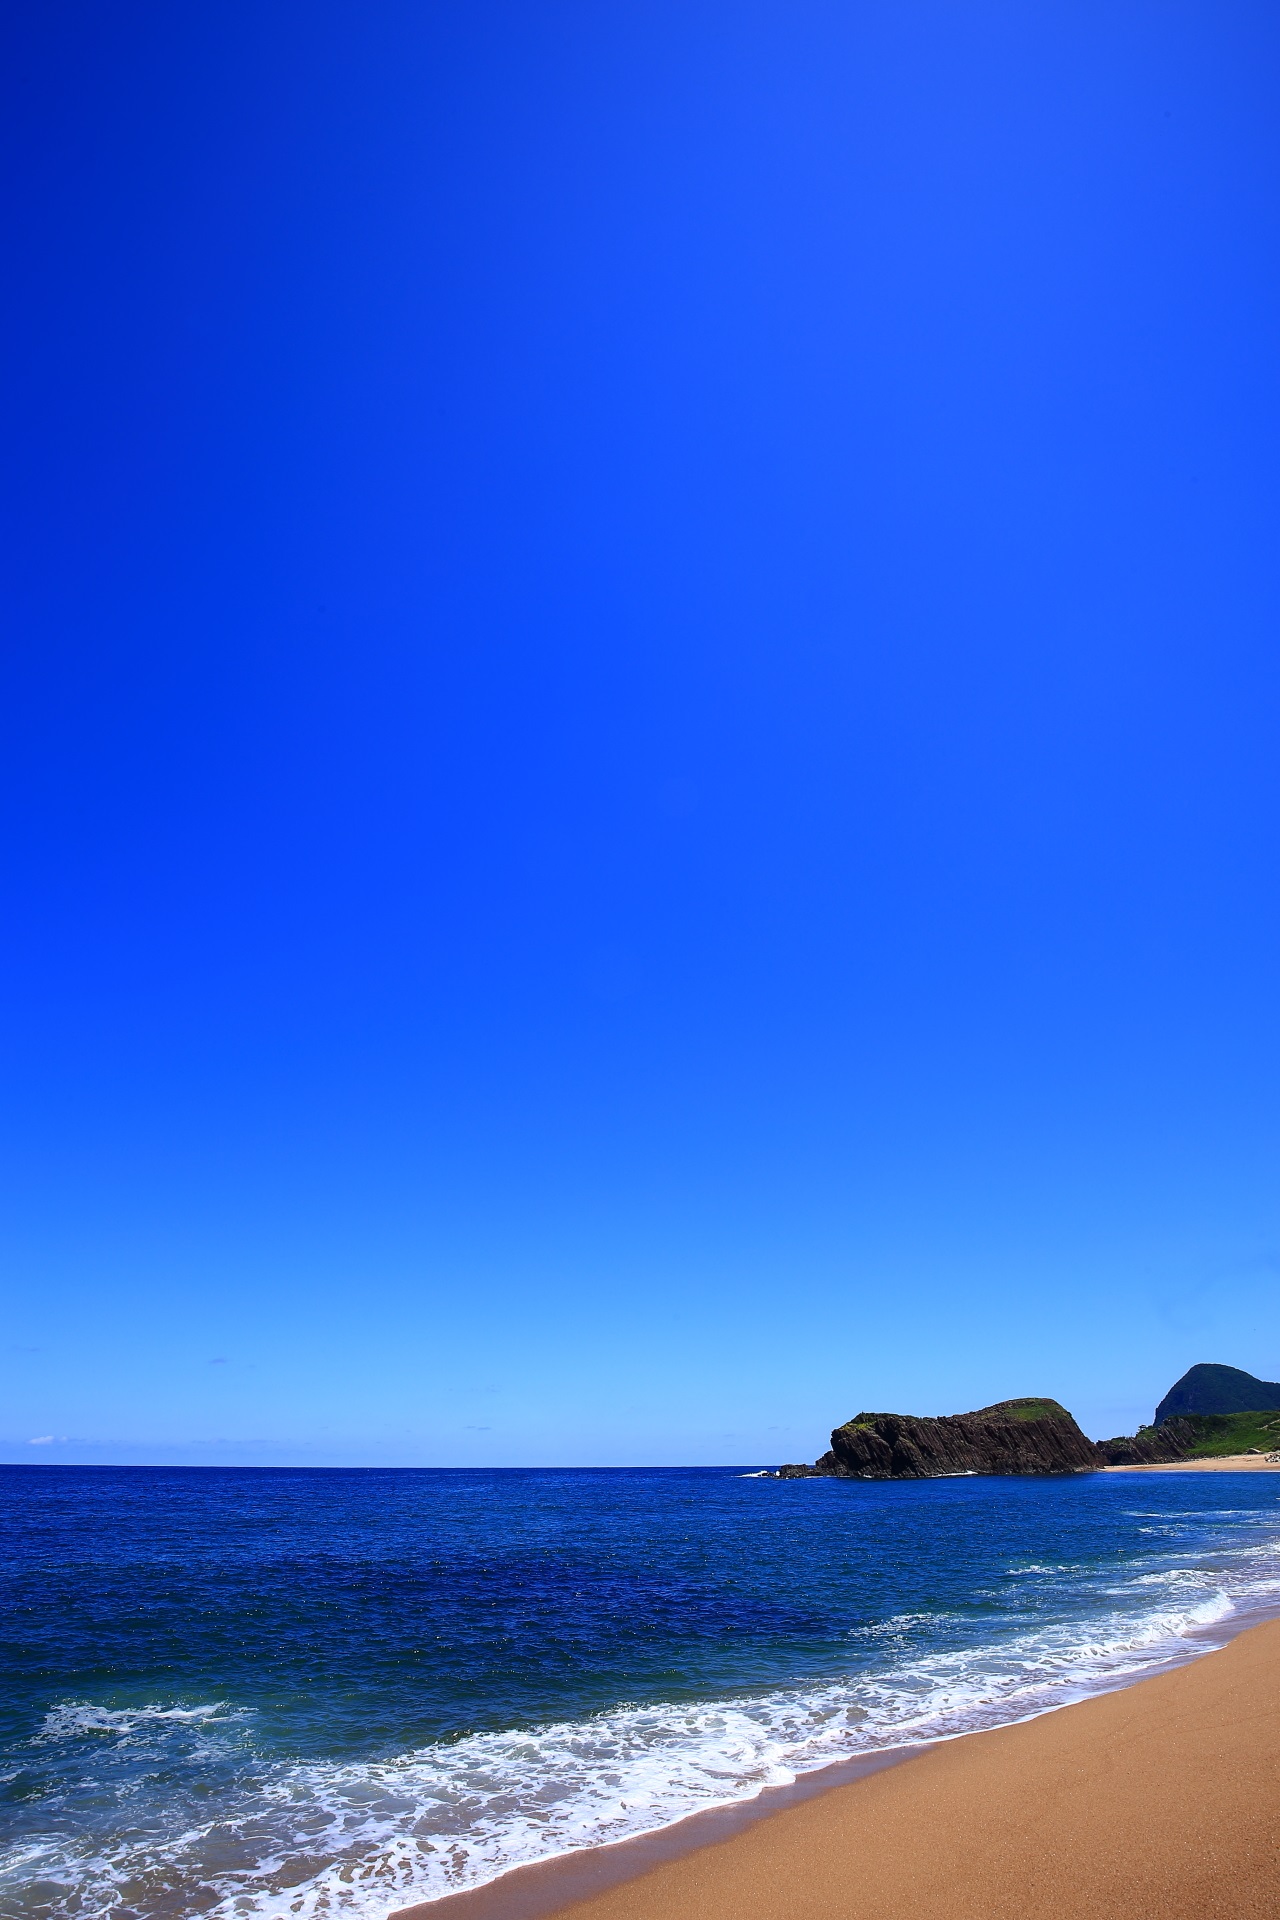 Tateiwa and blue sea in Kyotango